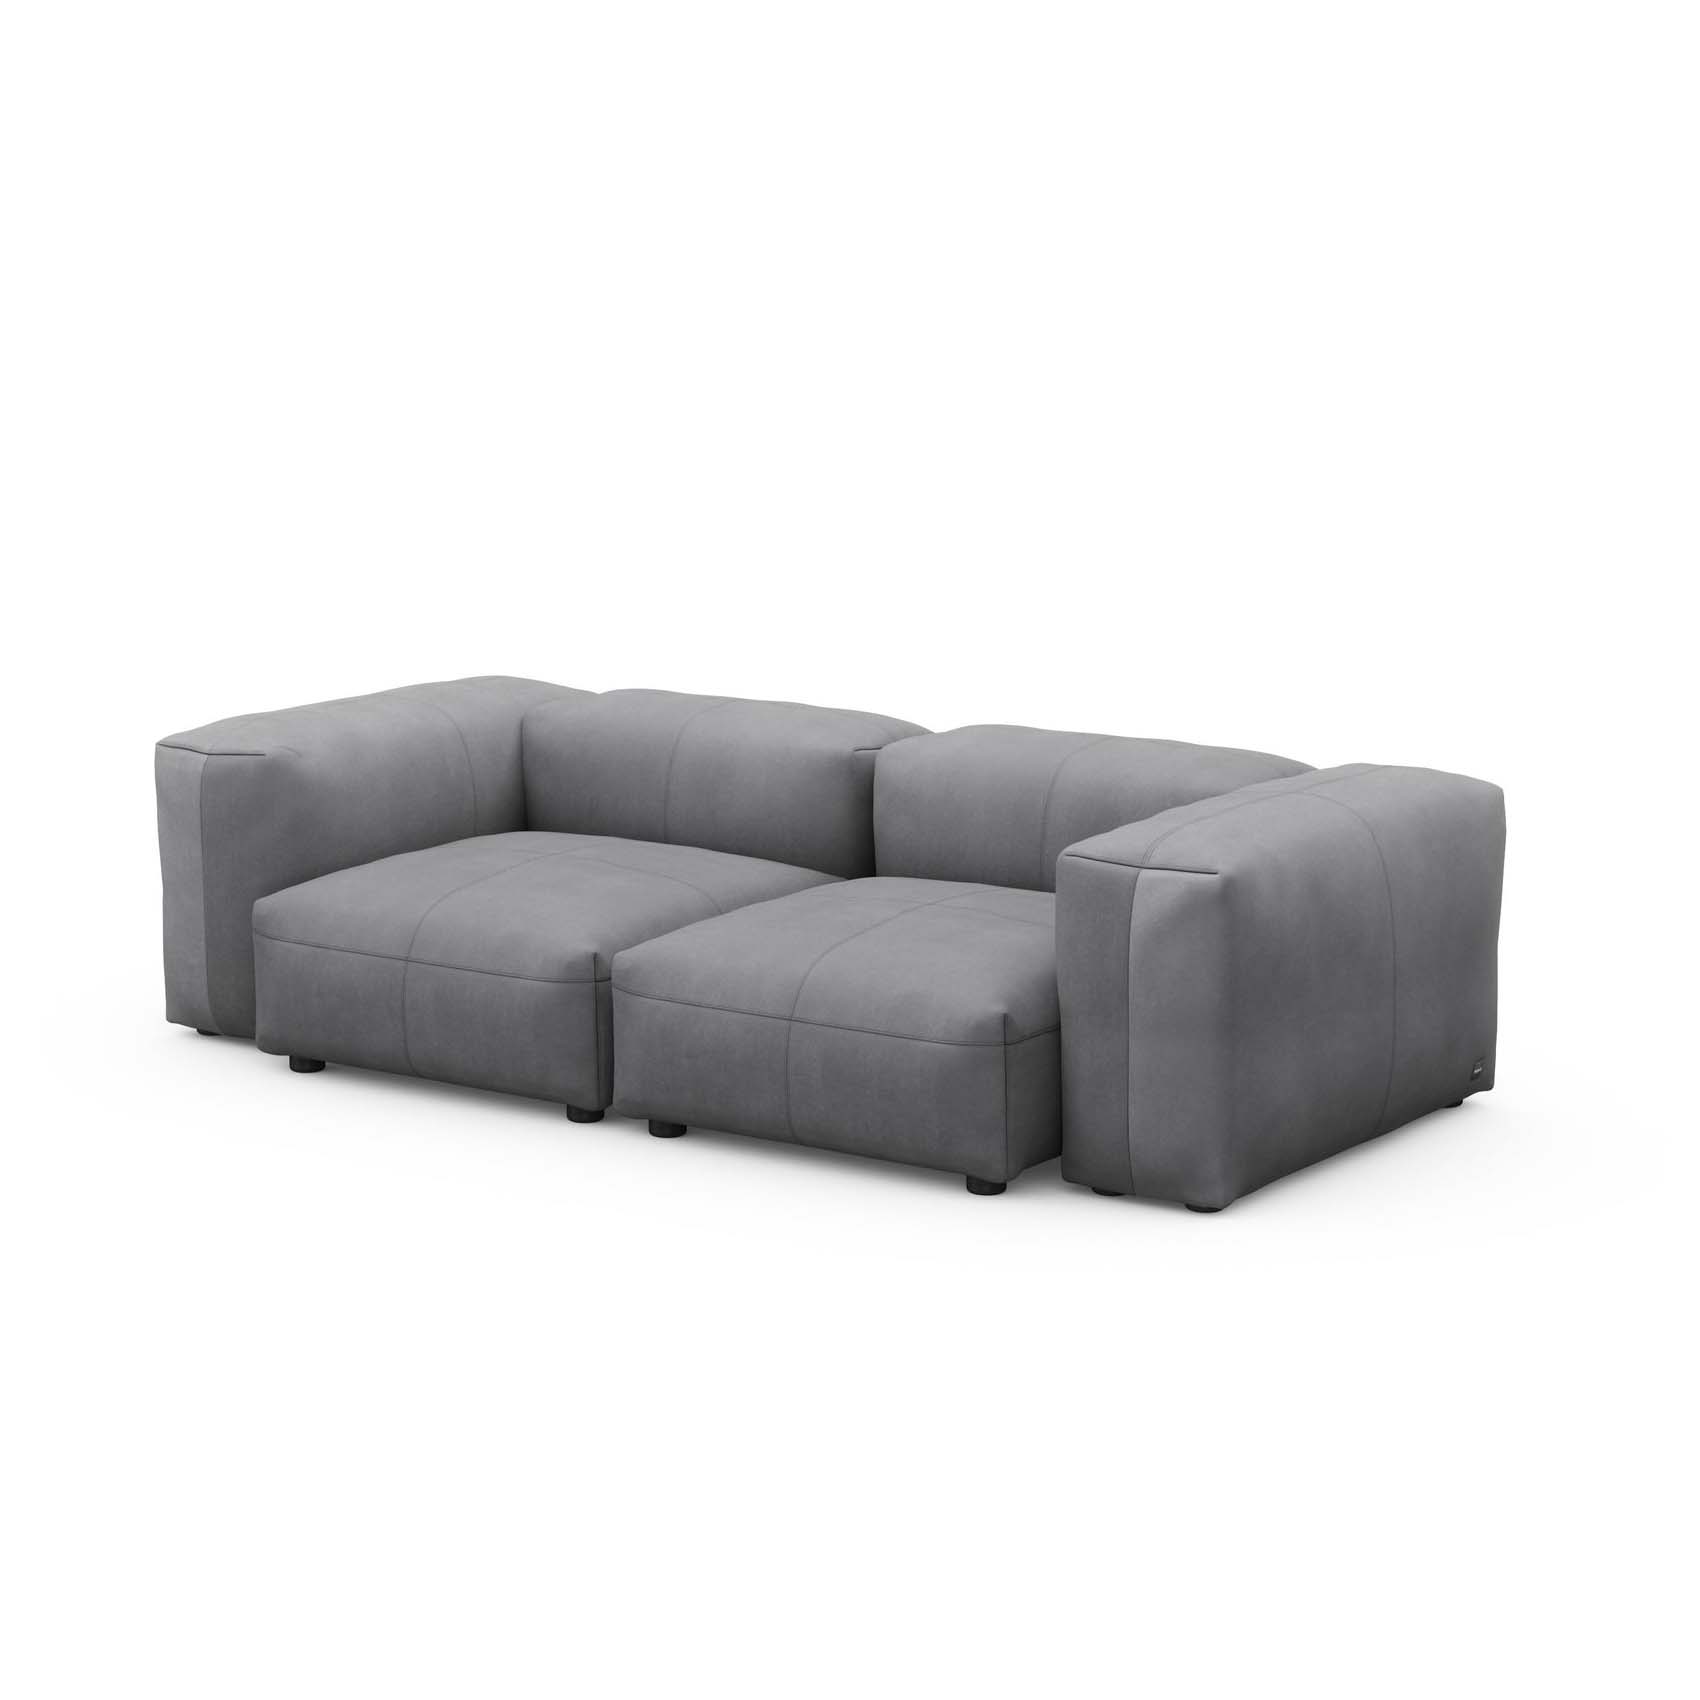 Two Seat Sofa S Leather Dark Grey